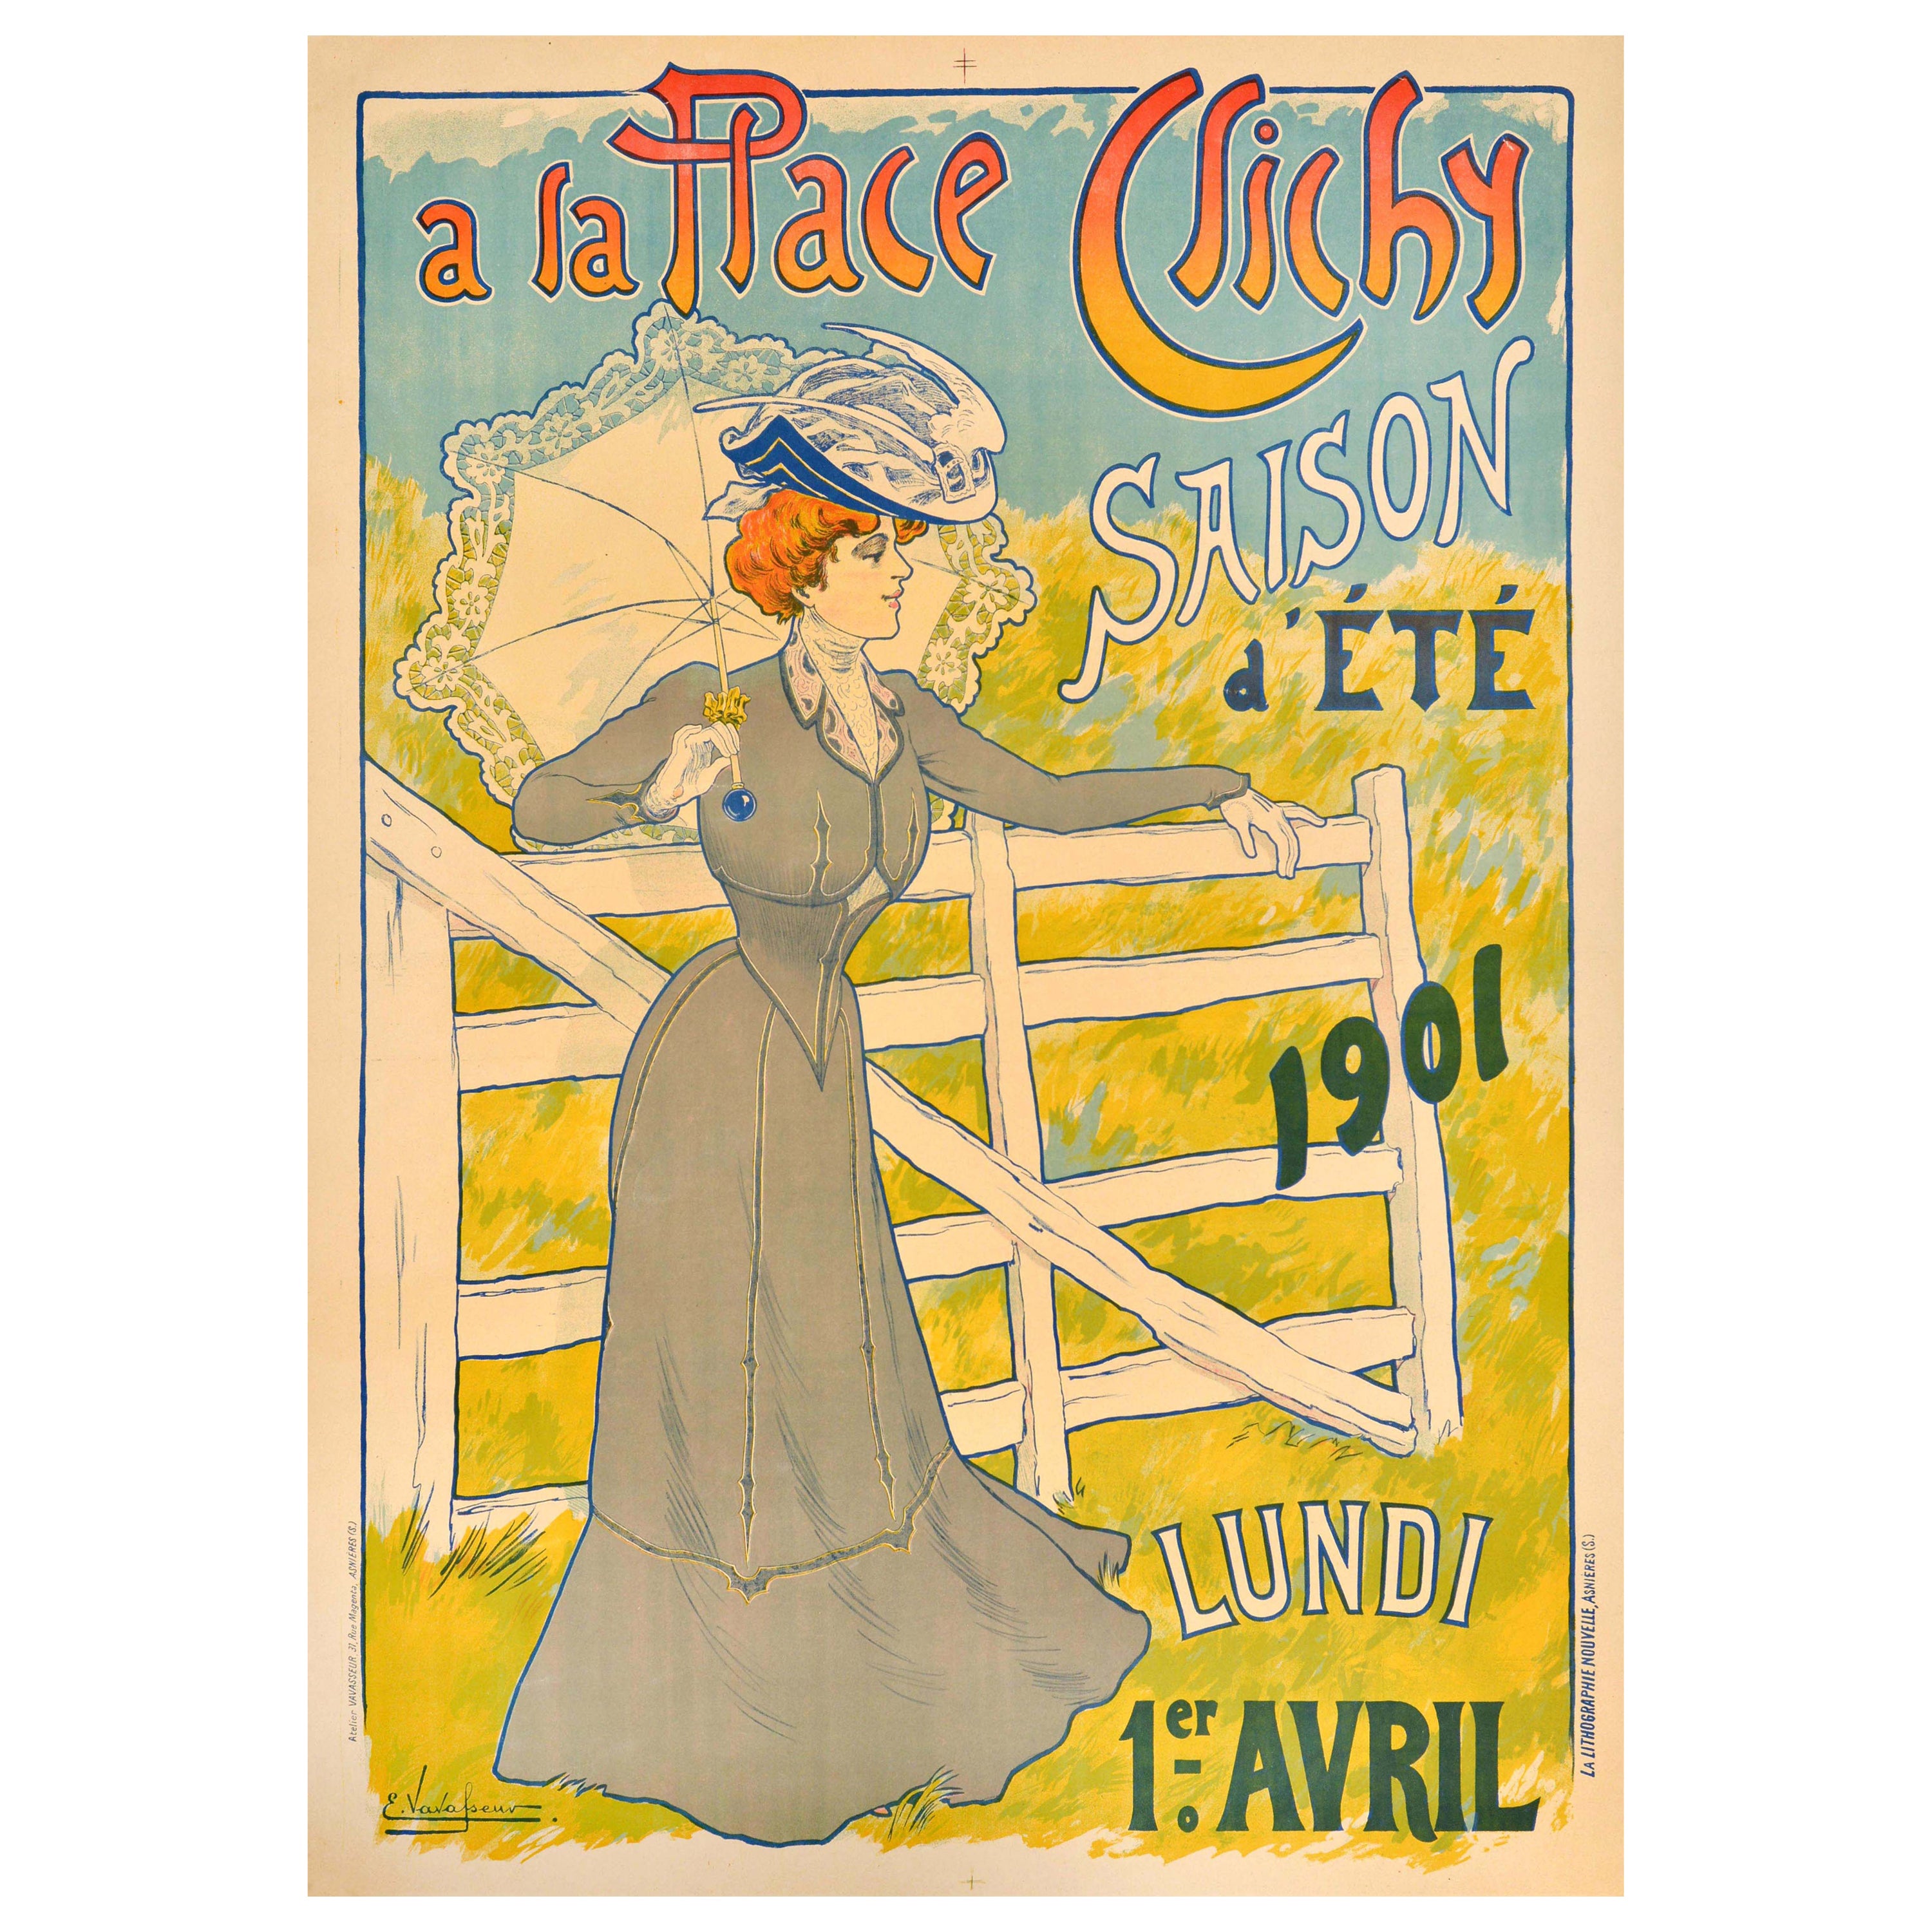 Original Antique Advertising Poster A La Place Clichy Sumer Season Fashion Paris